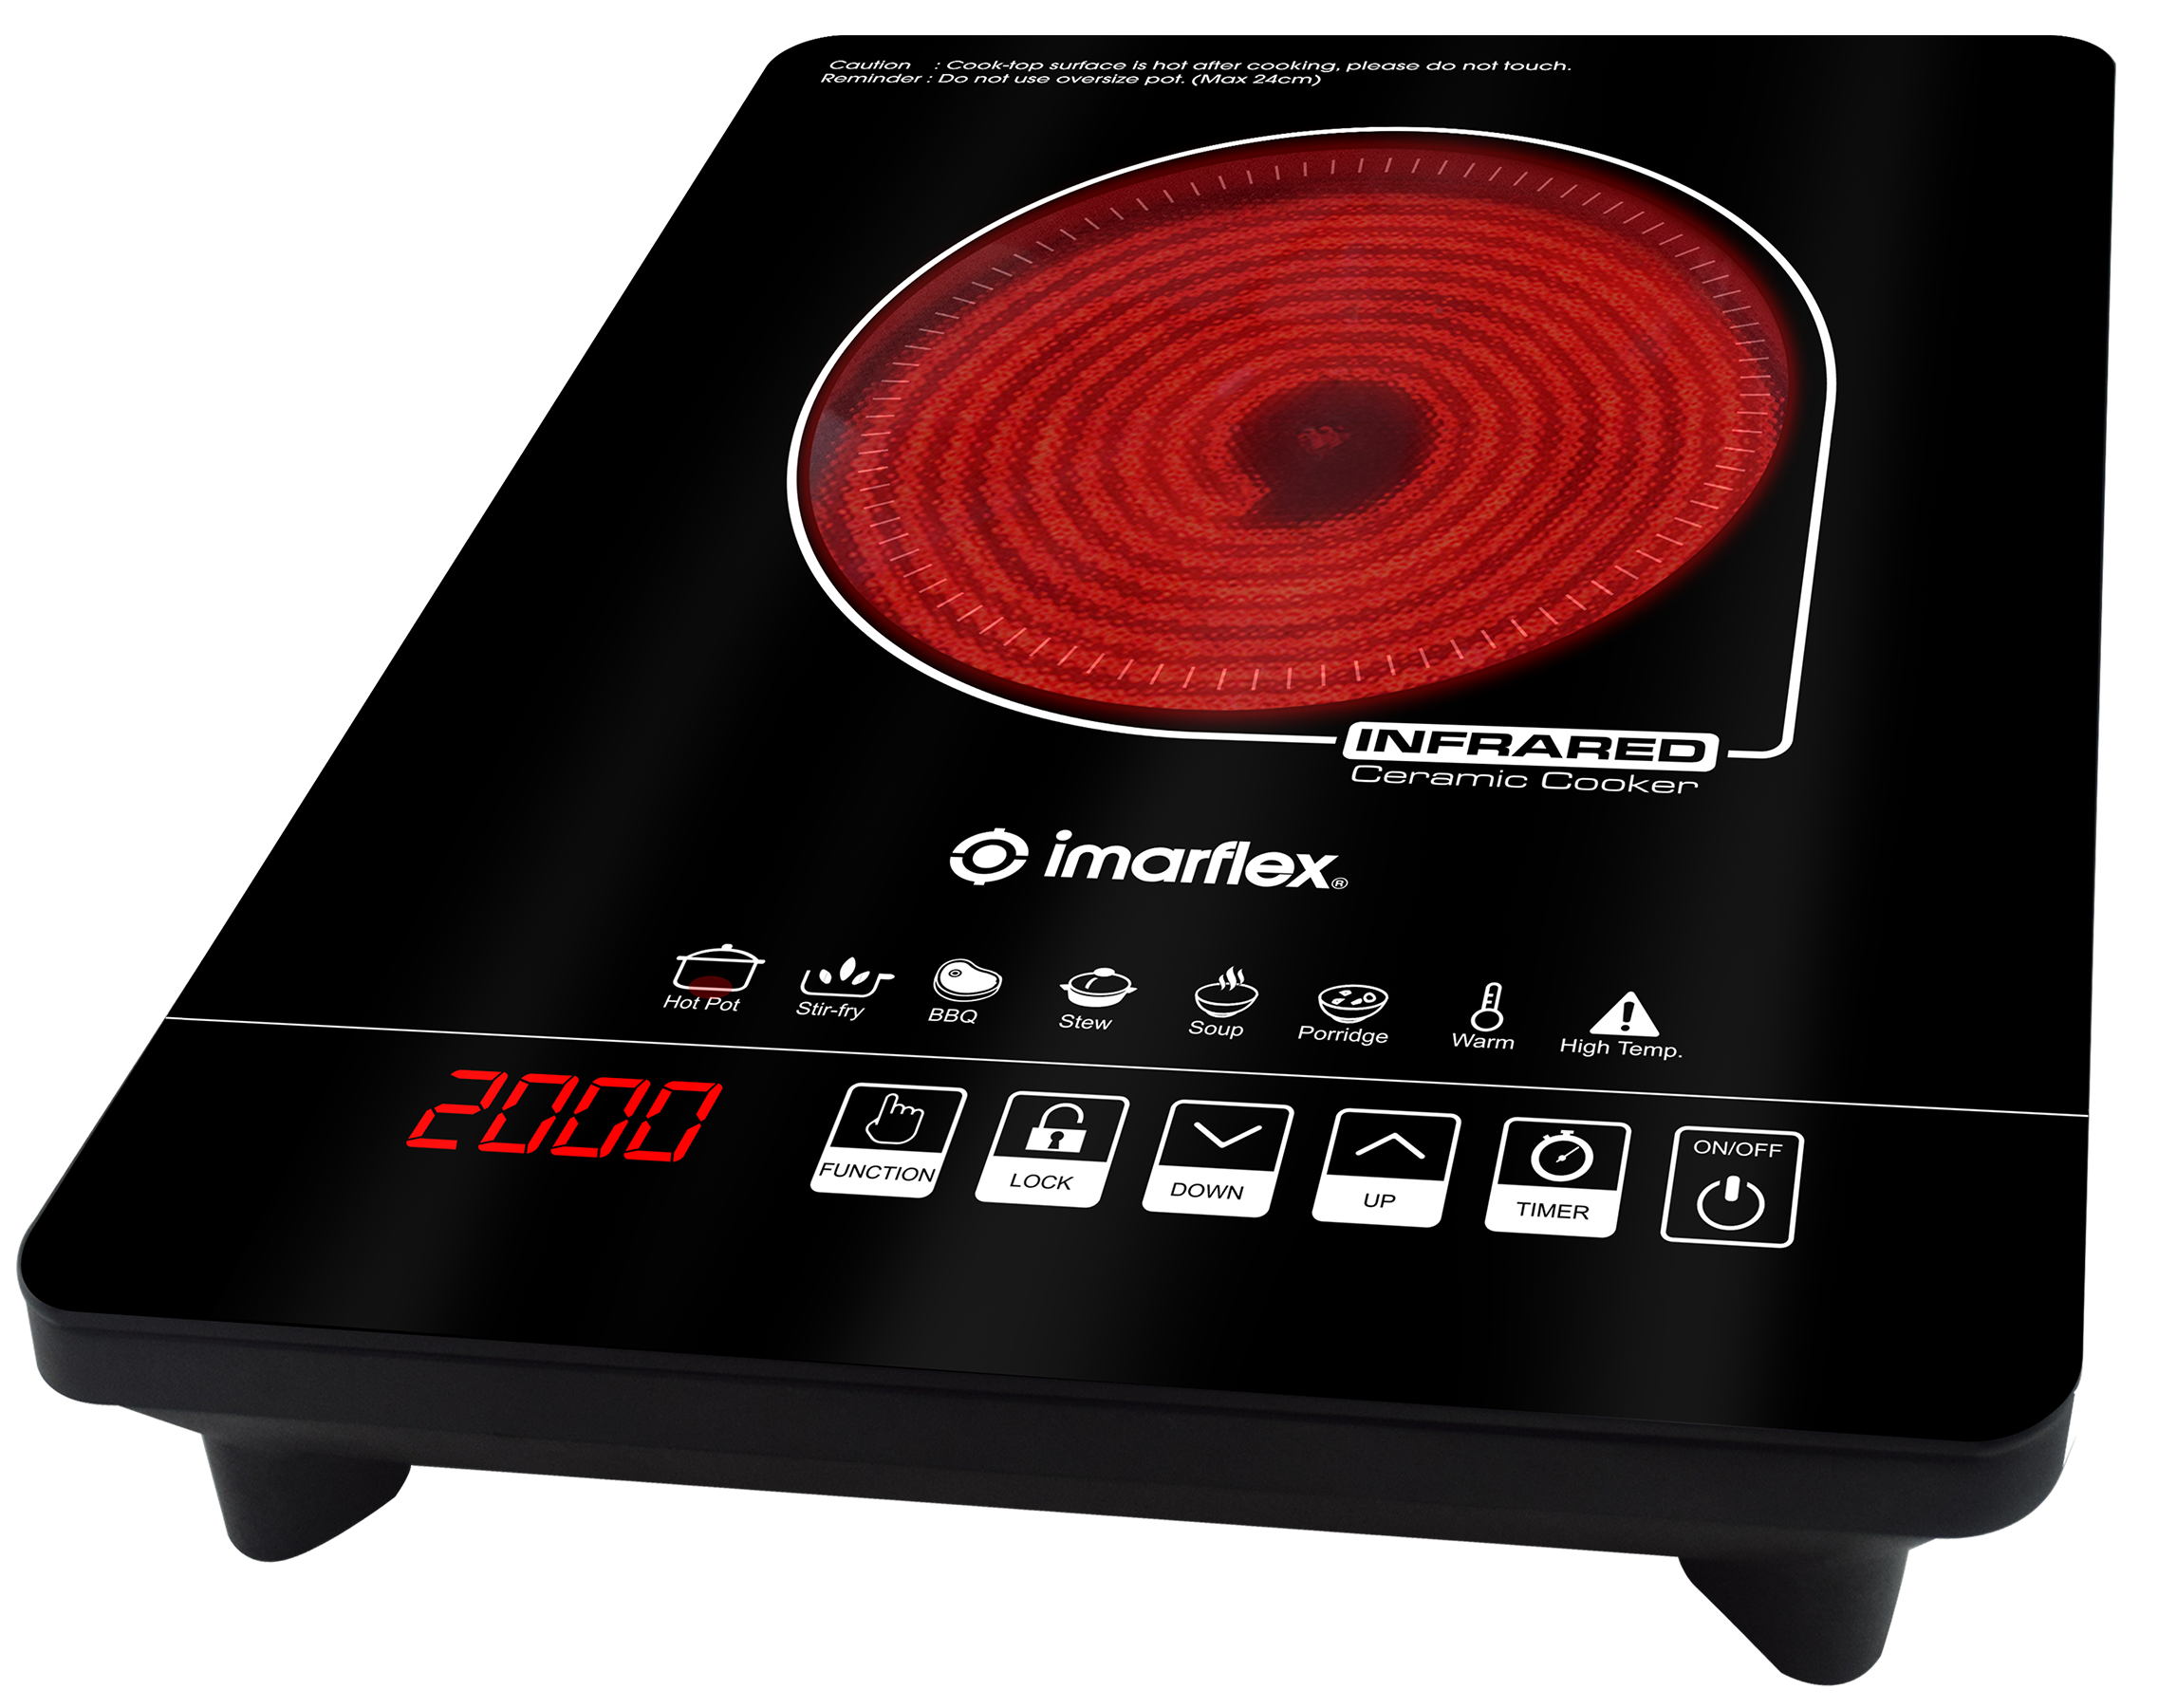 Imarflex IDX-1650S Induction Cooker Slim-type - Ansons